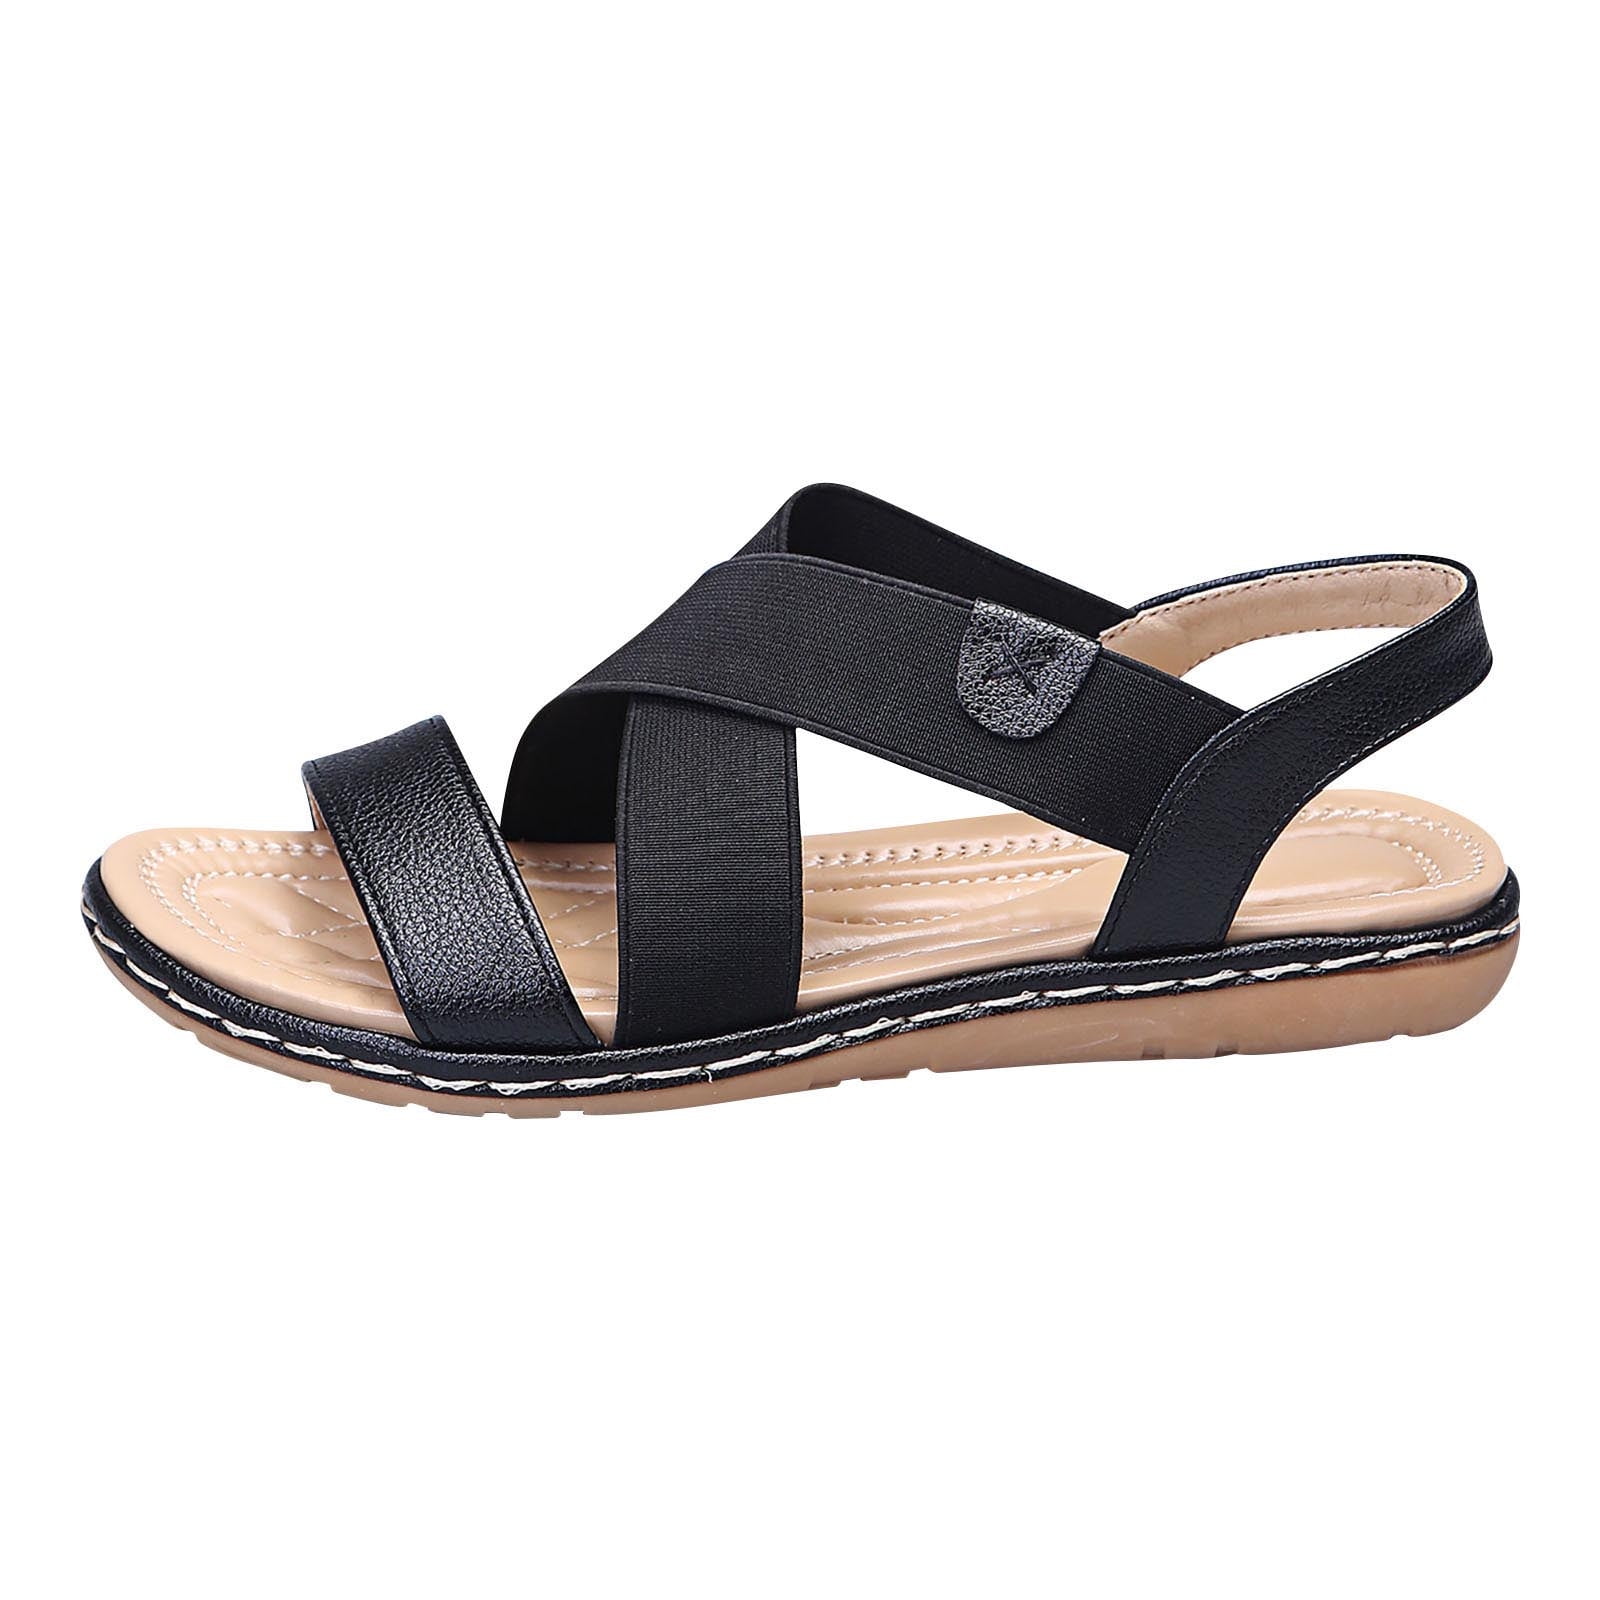 Platform Beach Sandals Women's Slip-on Elastic Sandals - Walmart.com